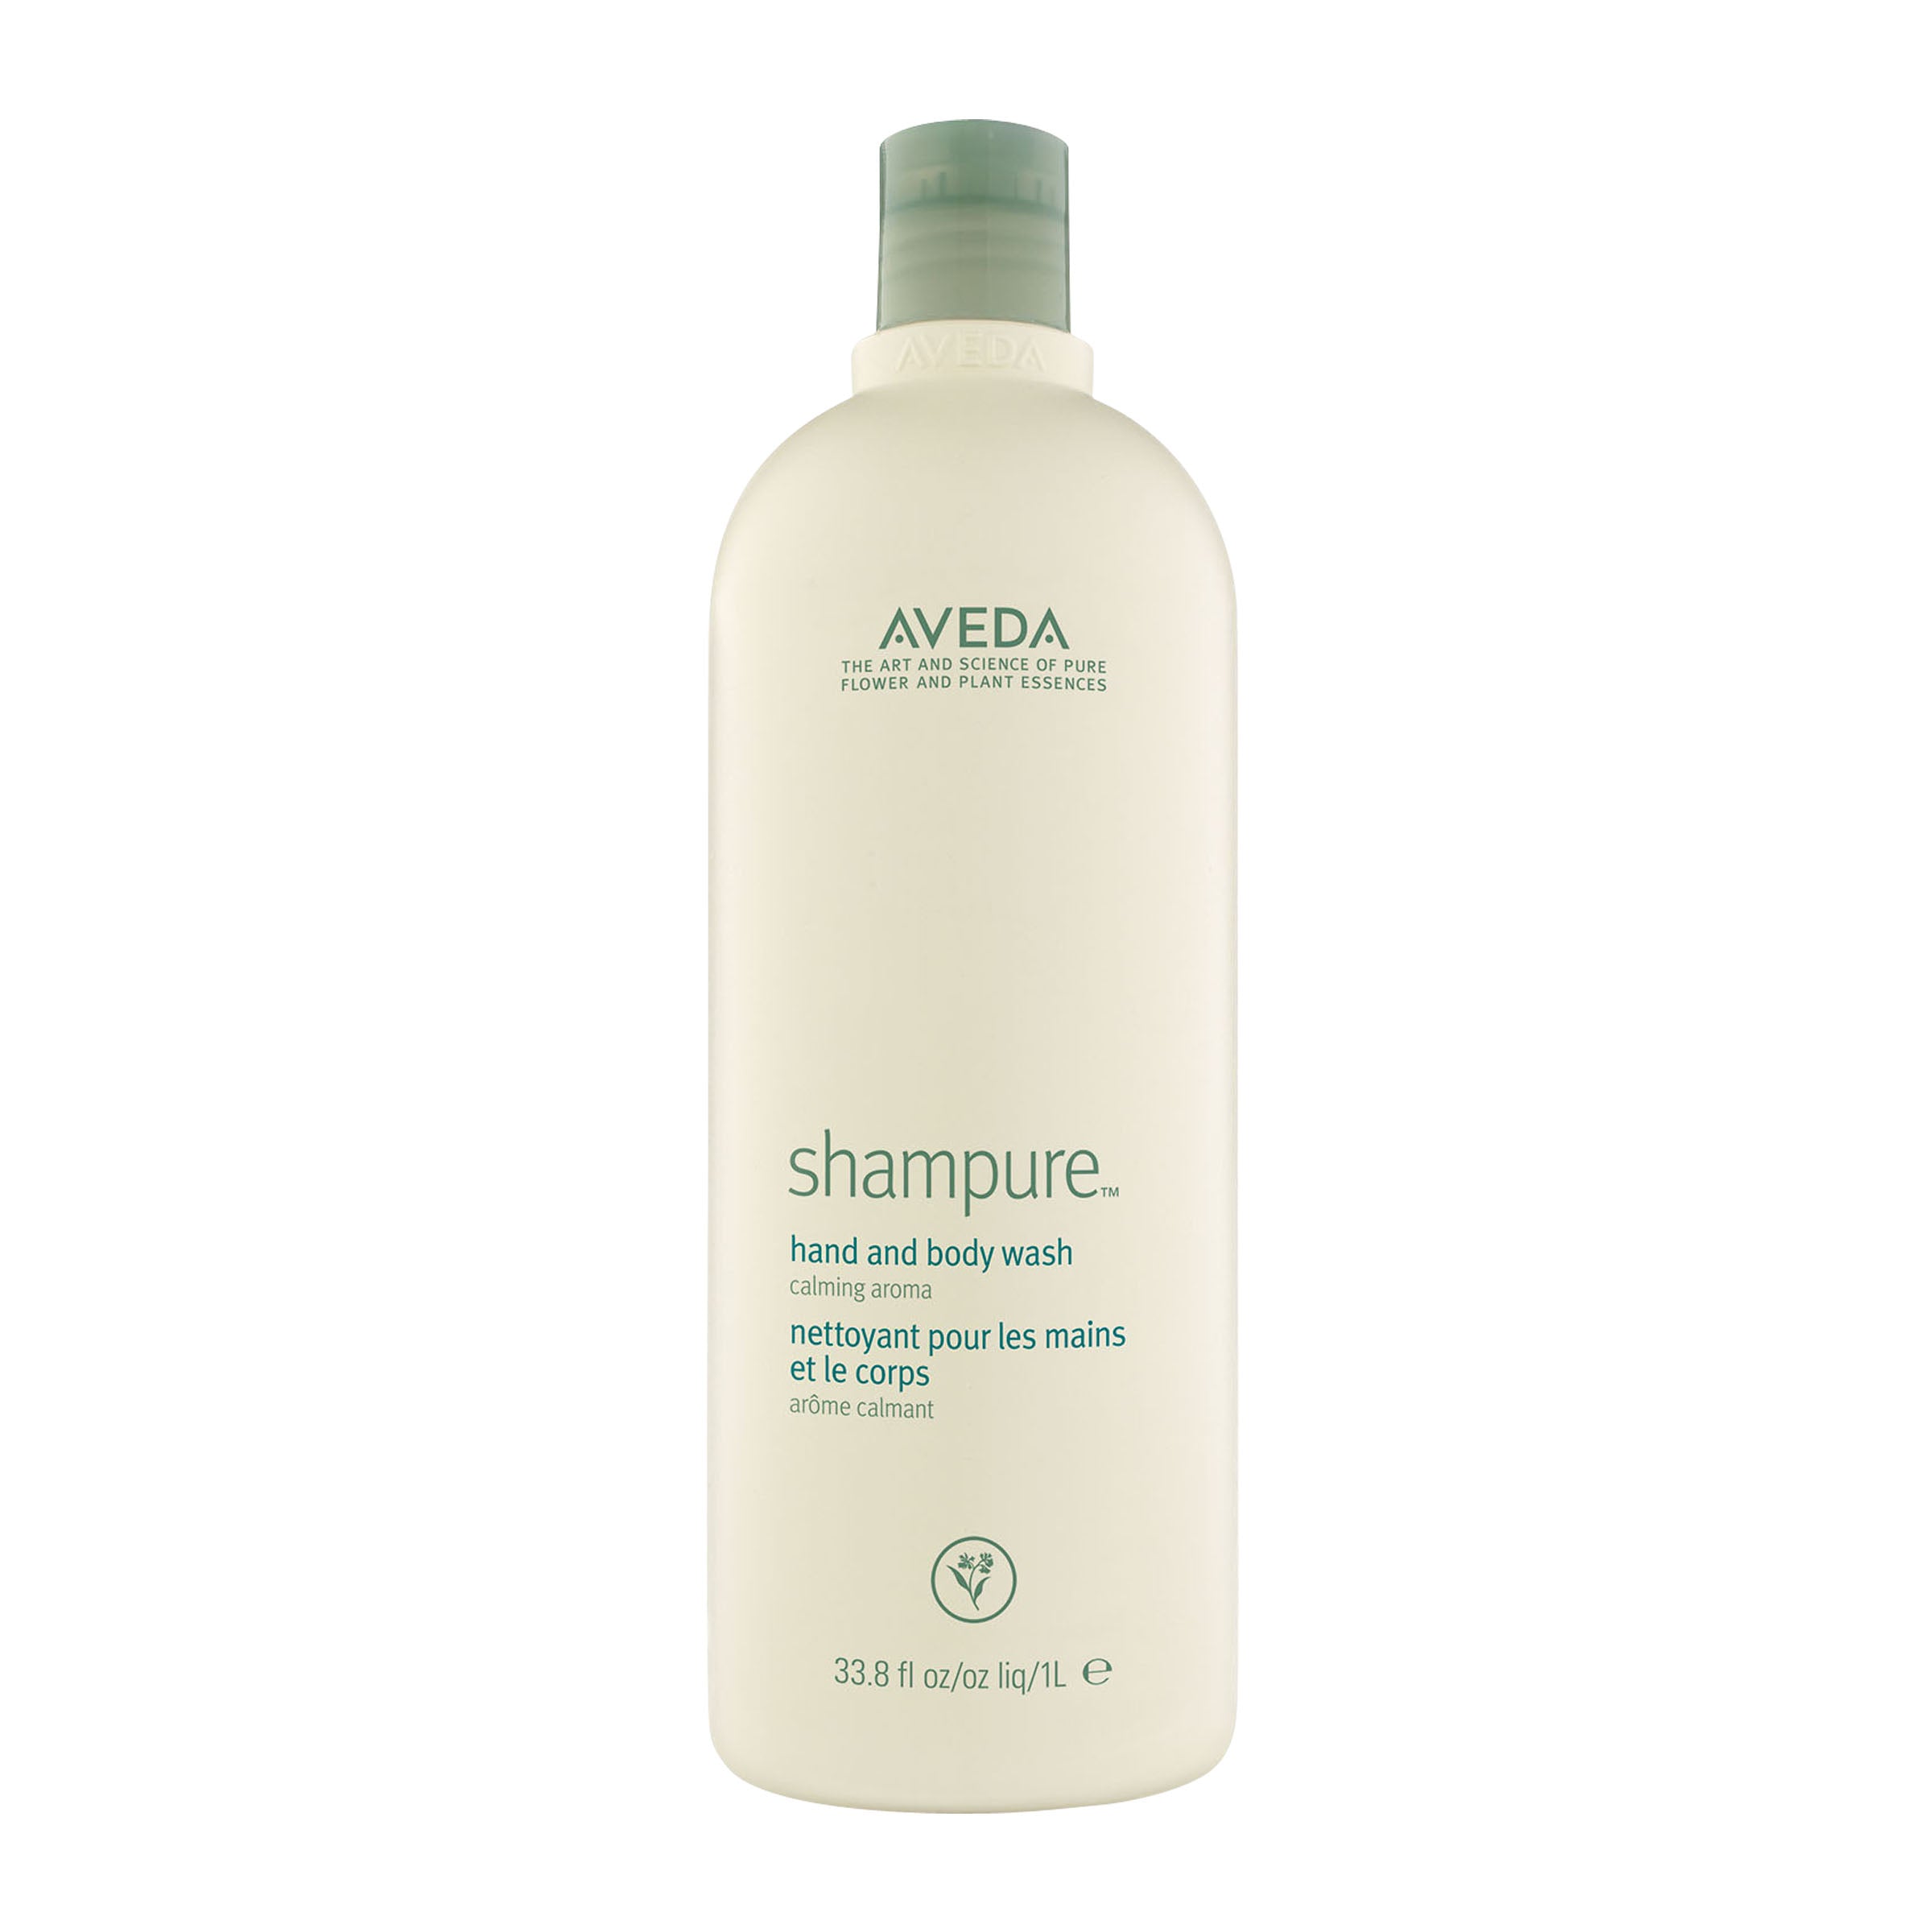 Aveda shampure™ hand and body wash 1 litre